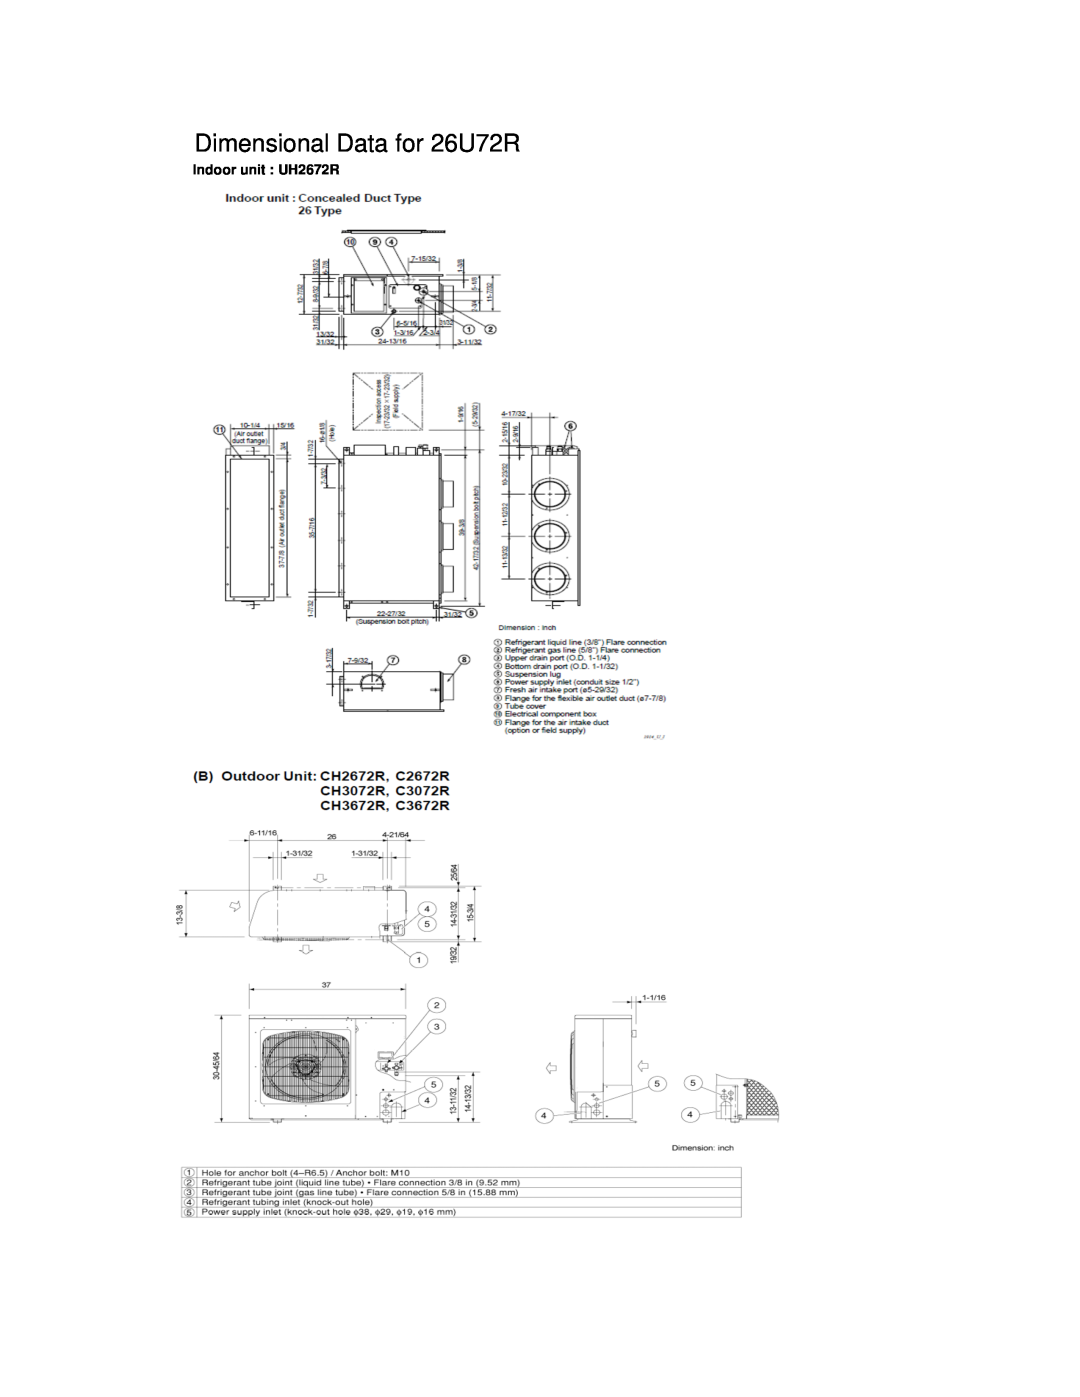 Sanyo manual Dimensional Data for 26U72R, Indoor unit UH2672R 